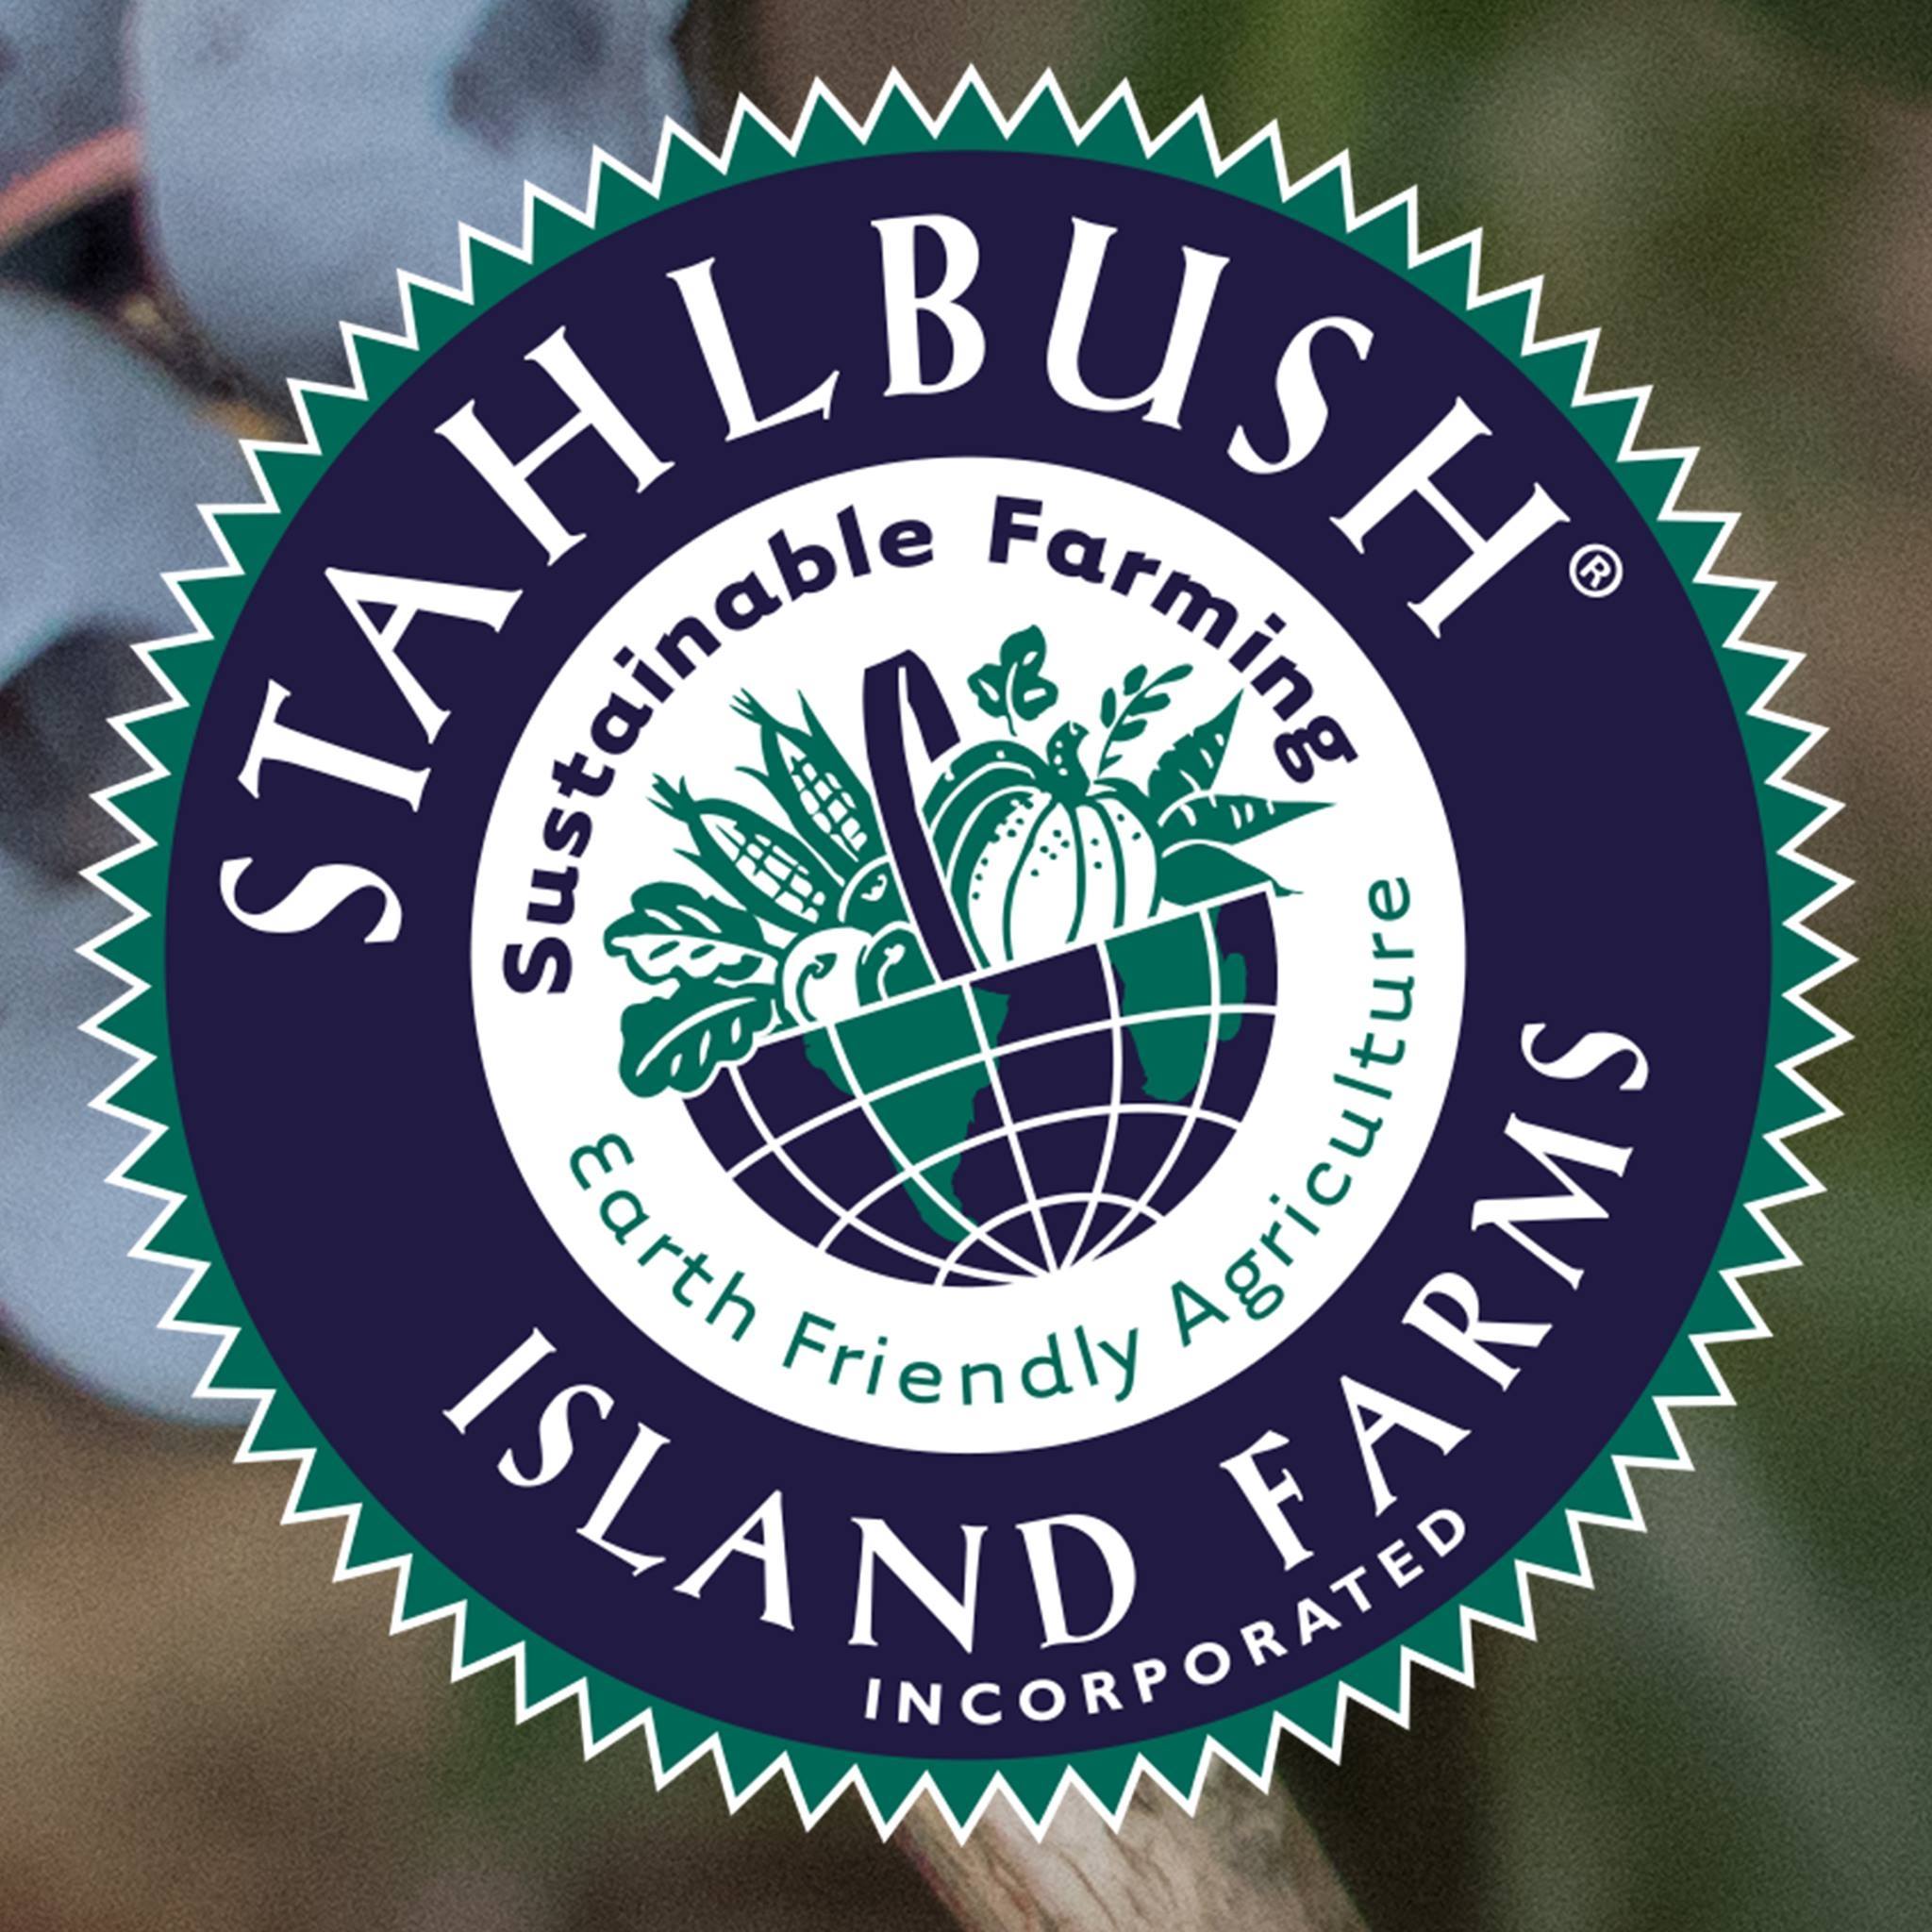 Stahlbush Island Farms